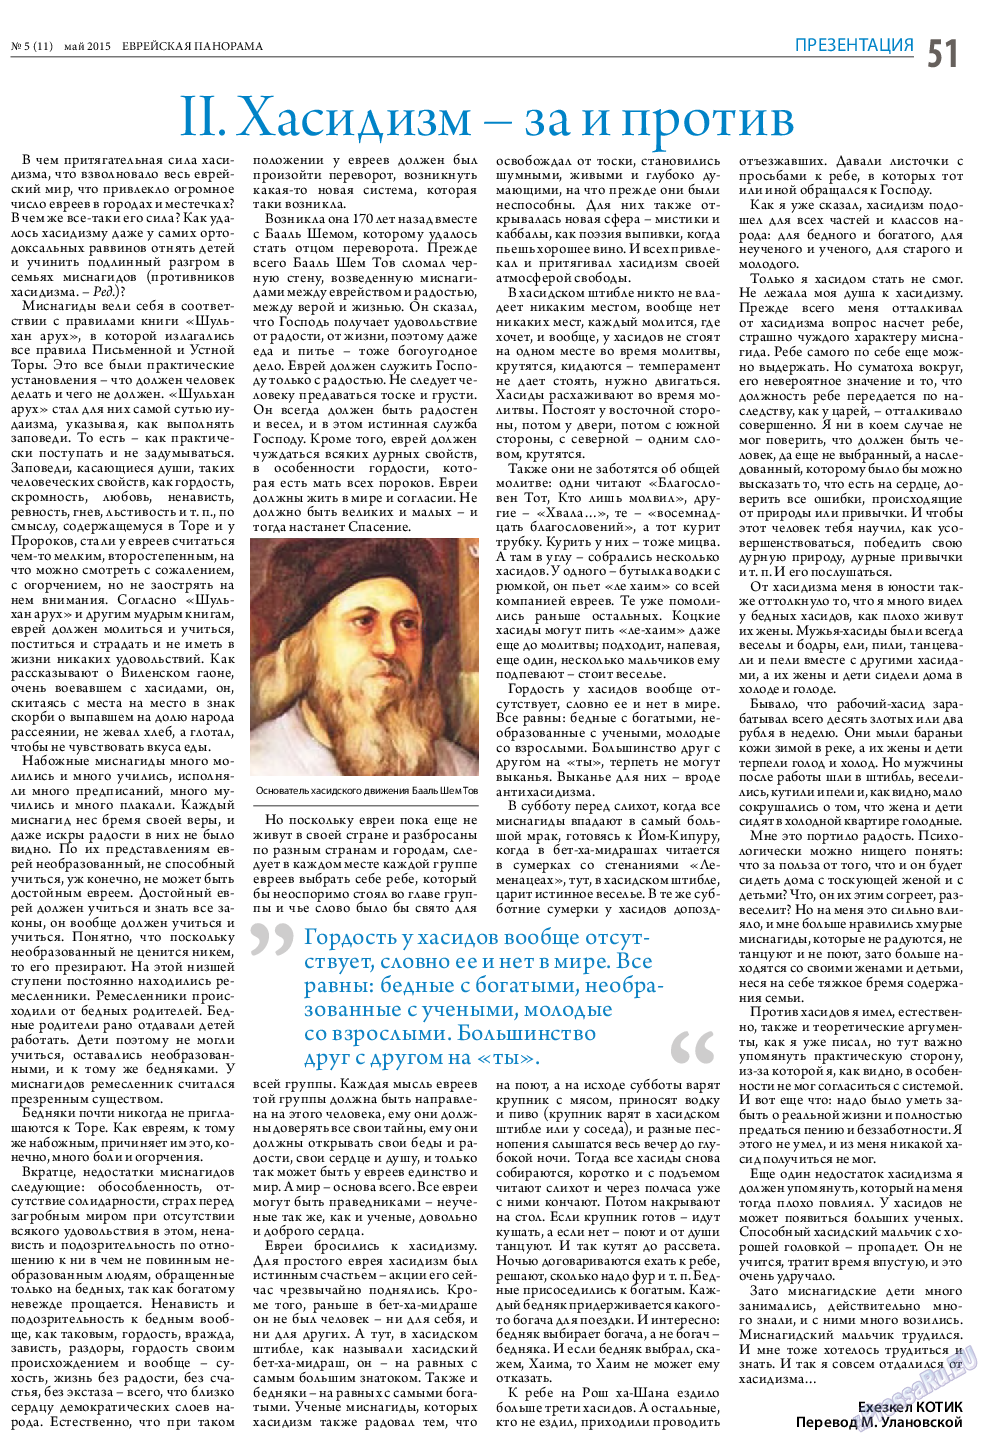 Еврейская панорама, газета. 2015 №5 стр.51